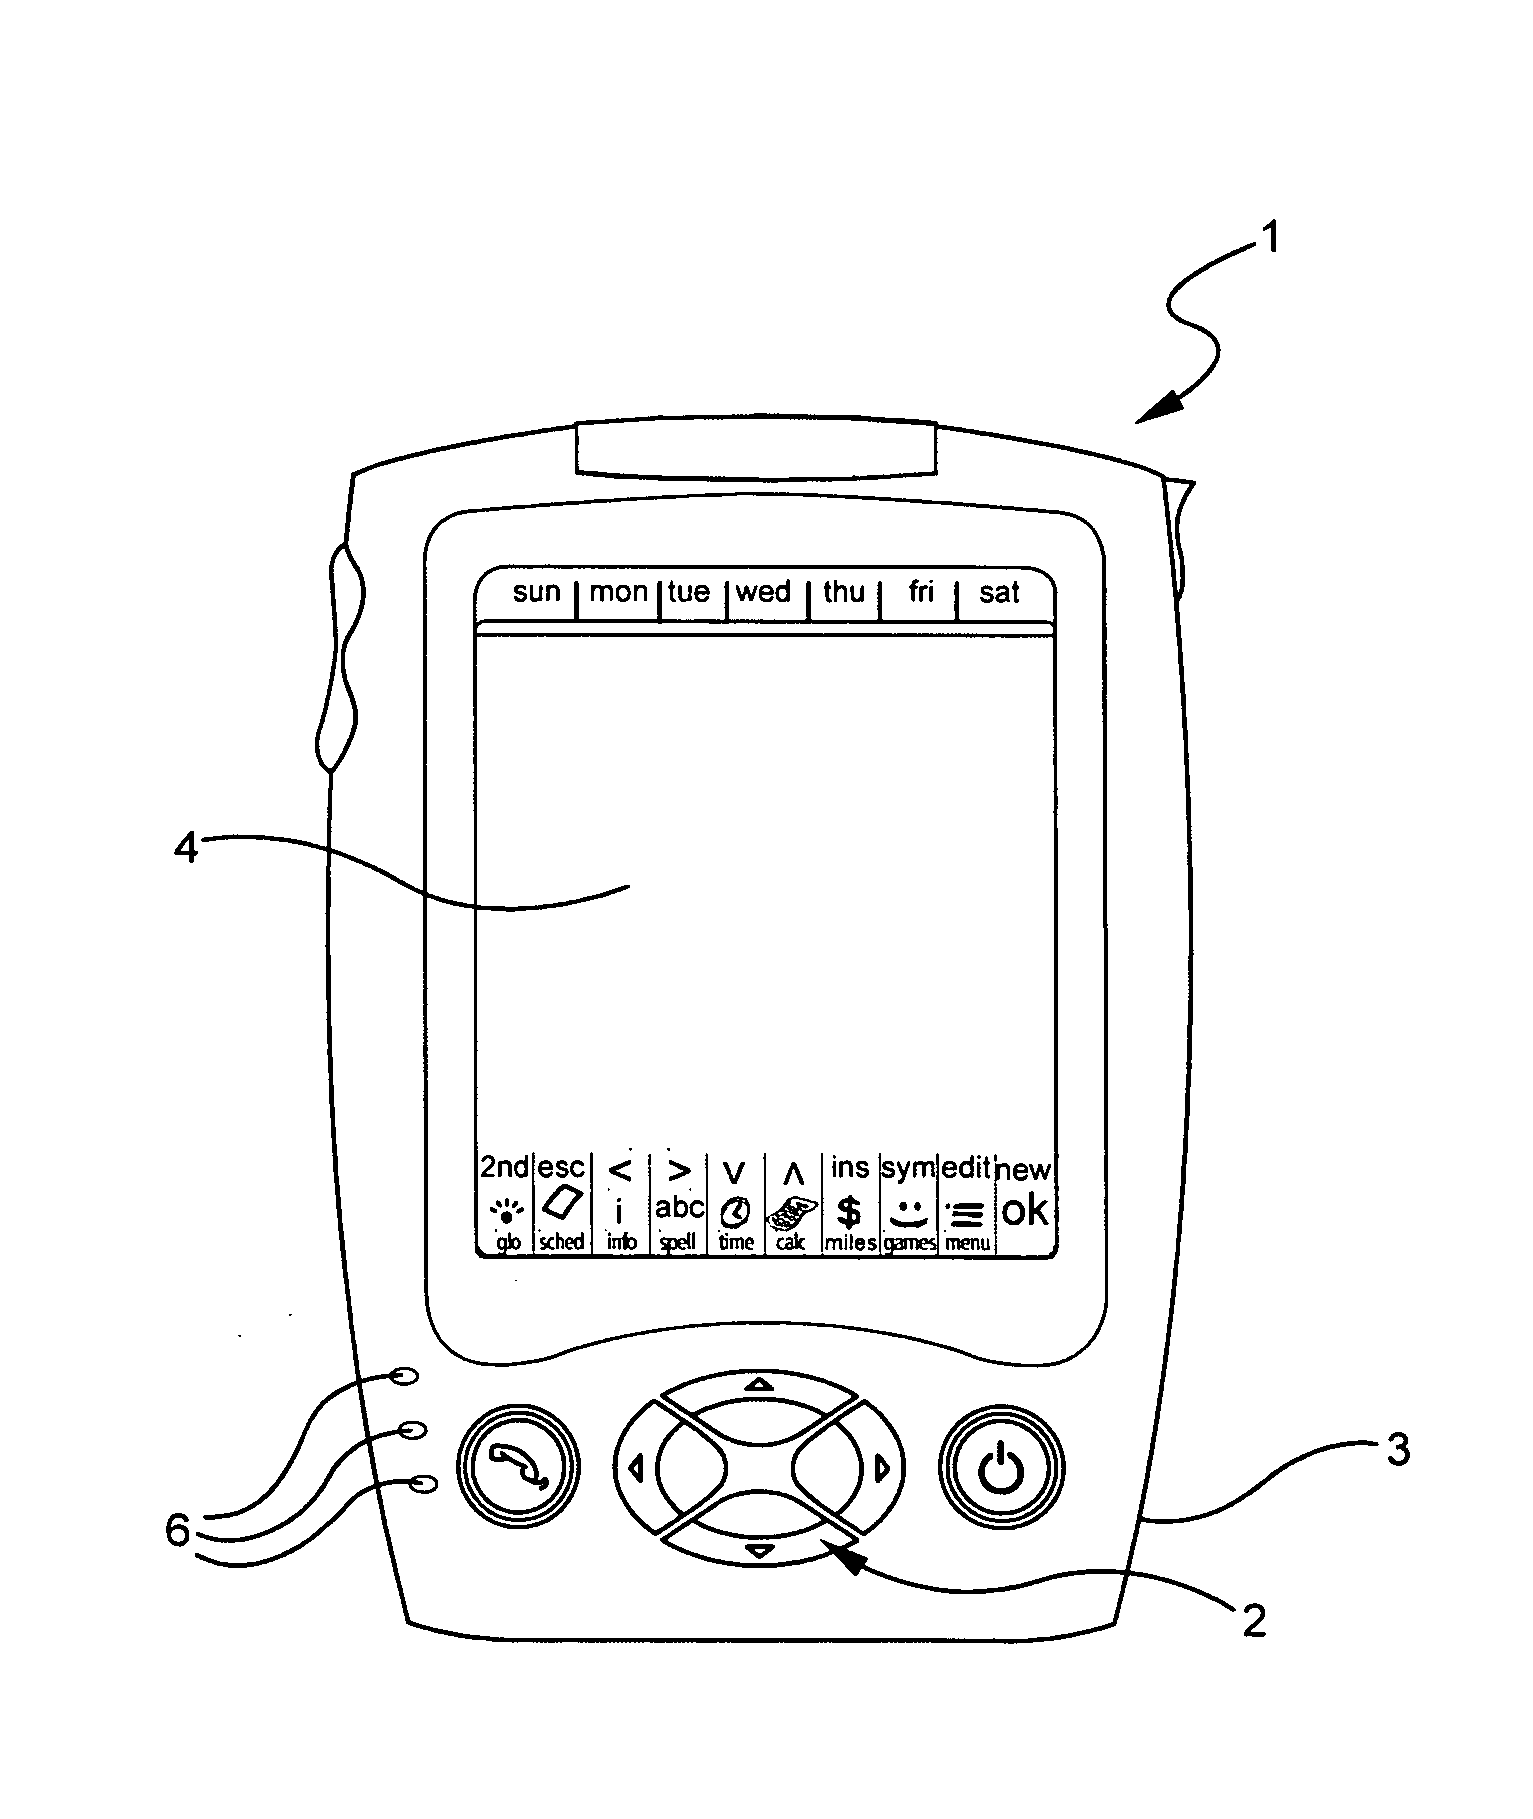 Electronic reminder device